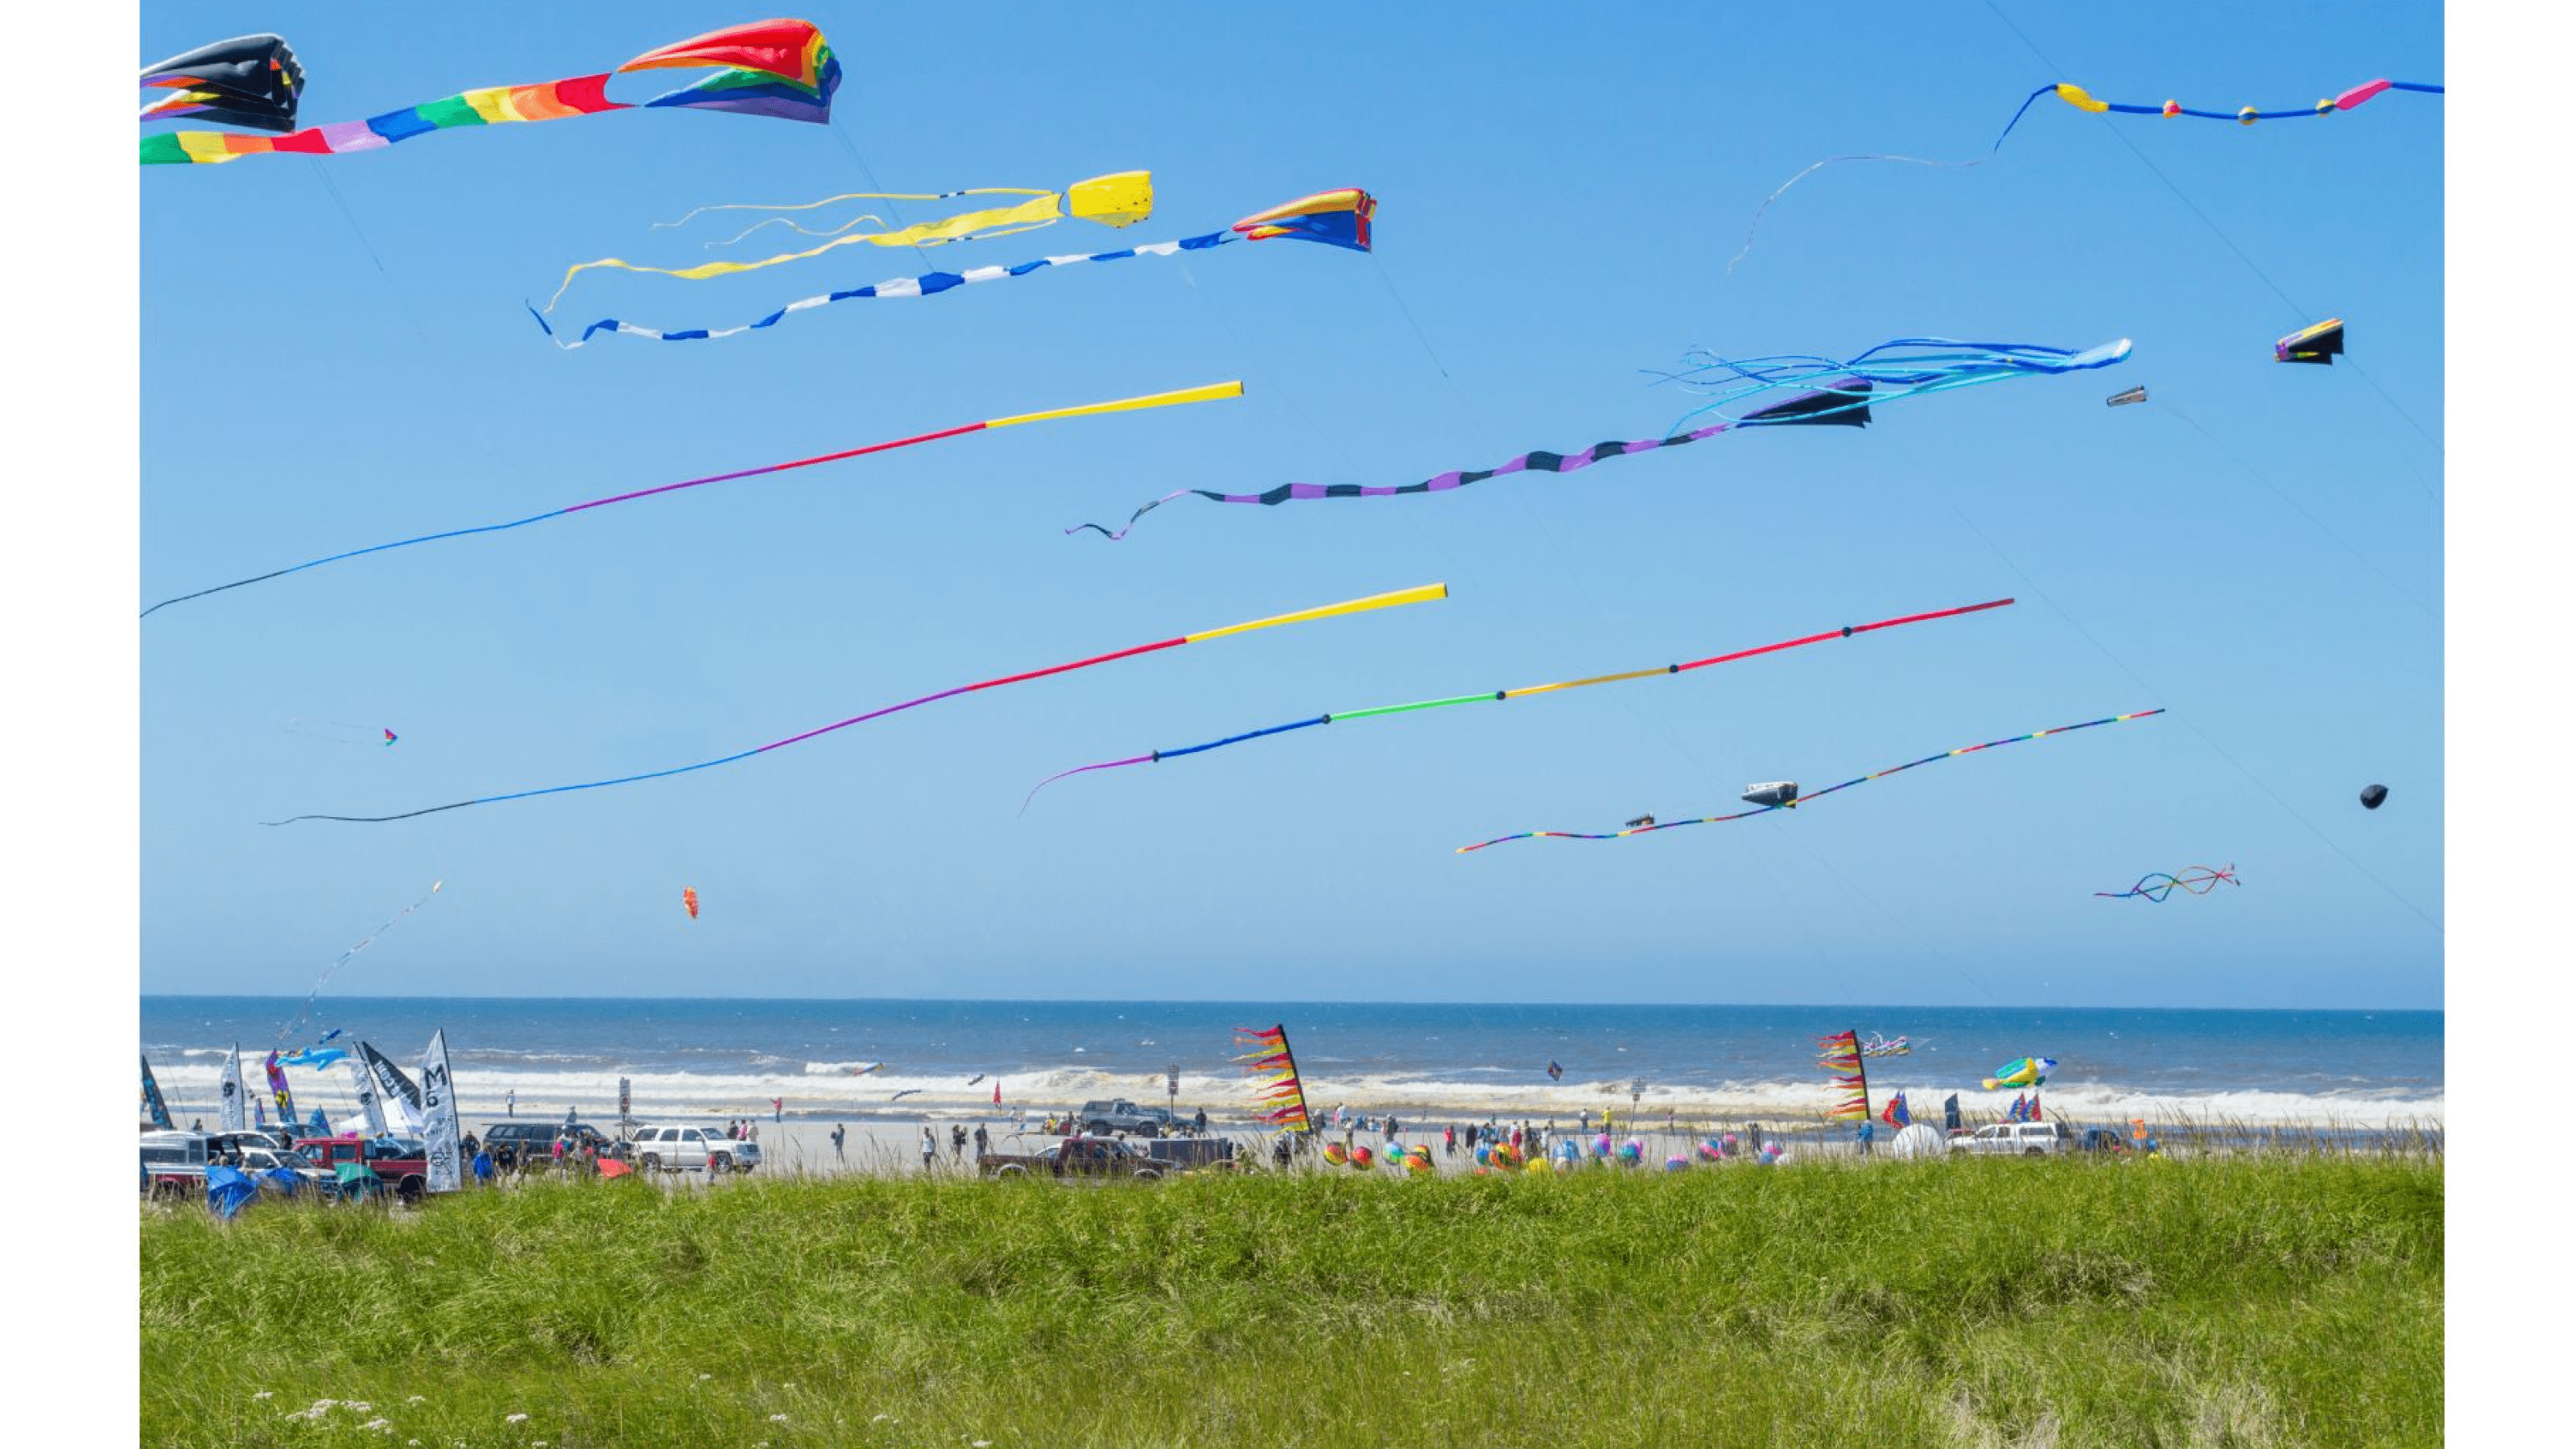 Kites flying together at a festival